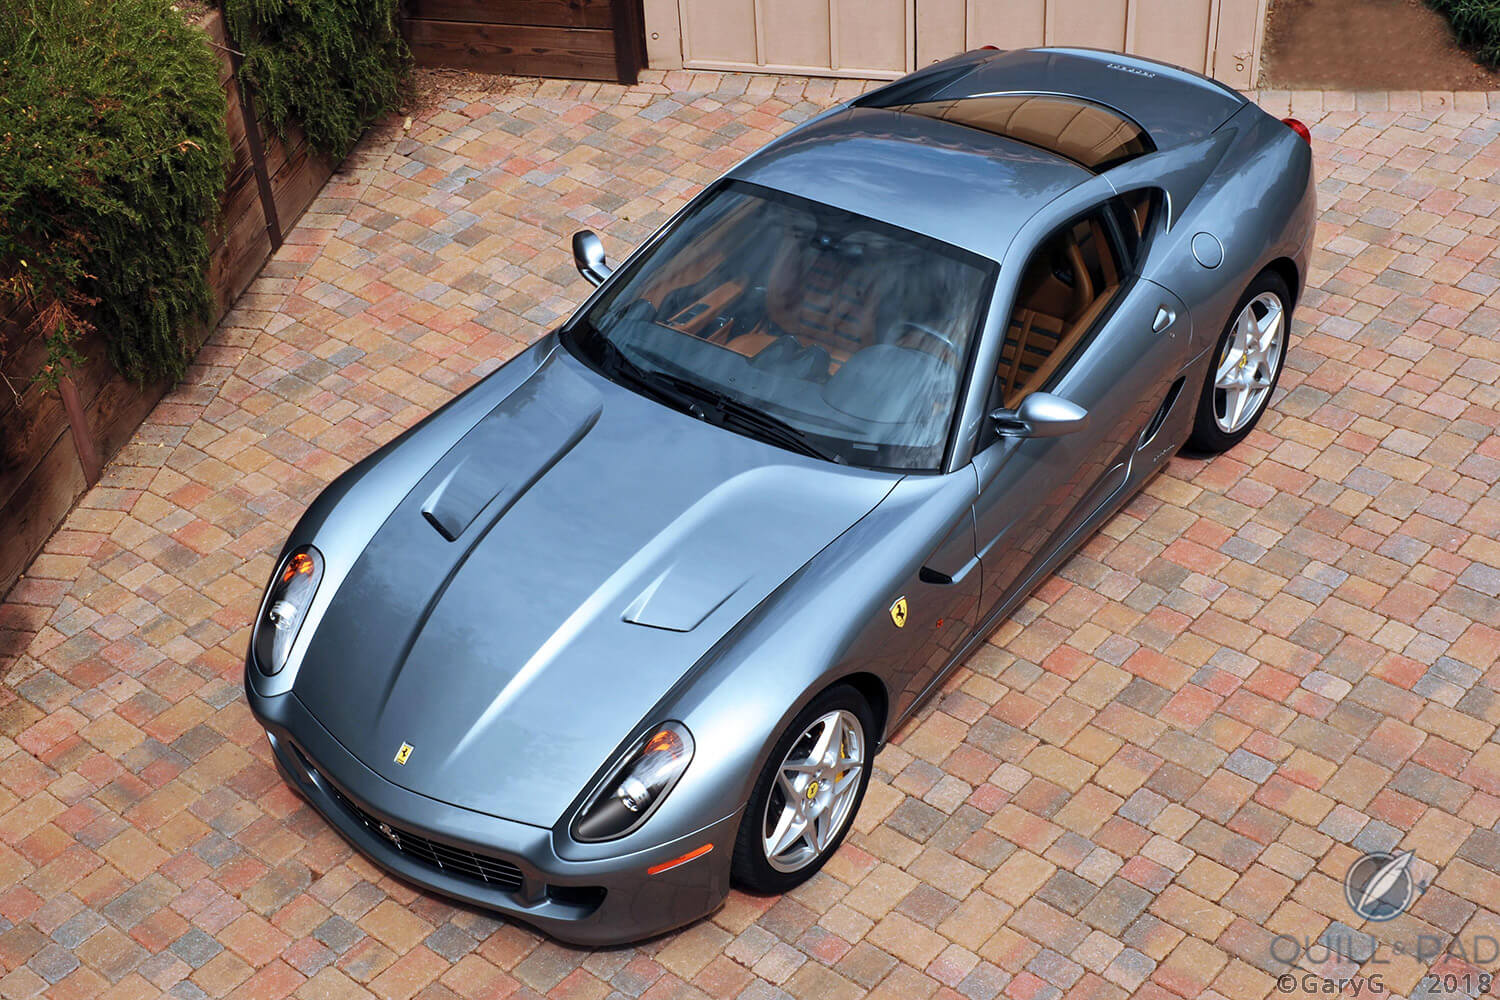 All original: the author’s Ferrari 599 GTB Fiorano